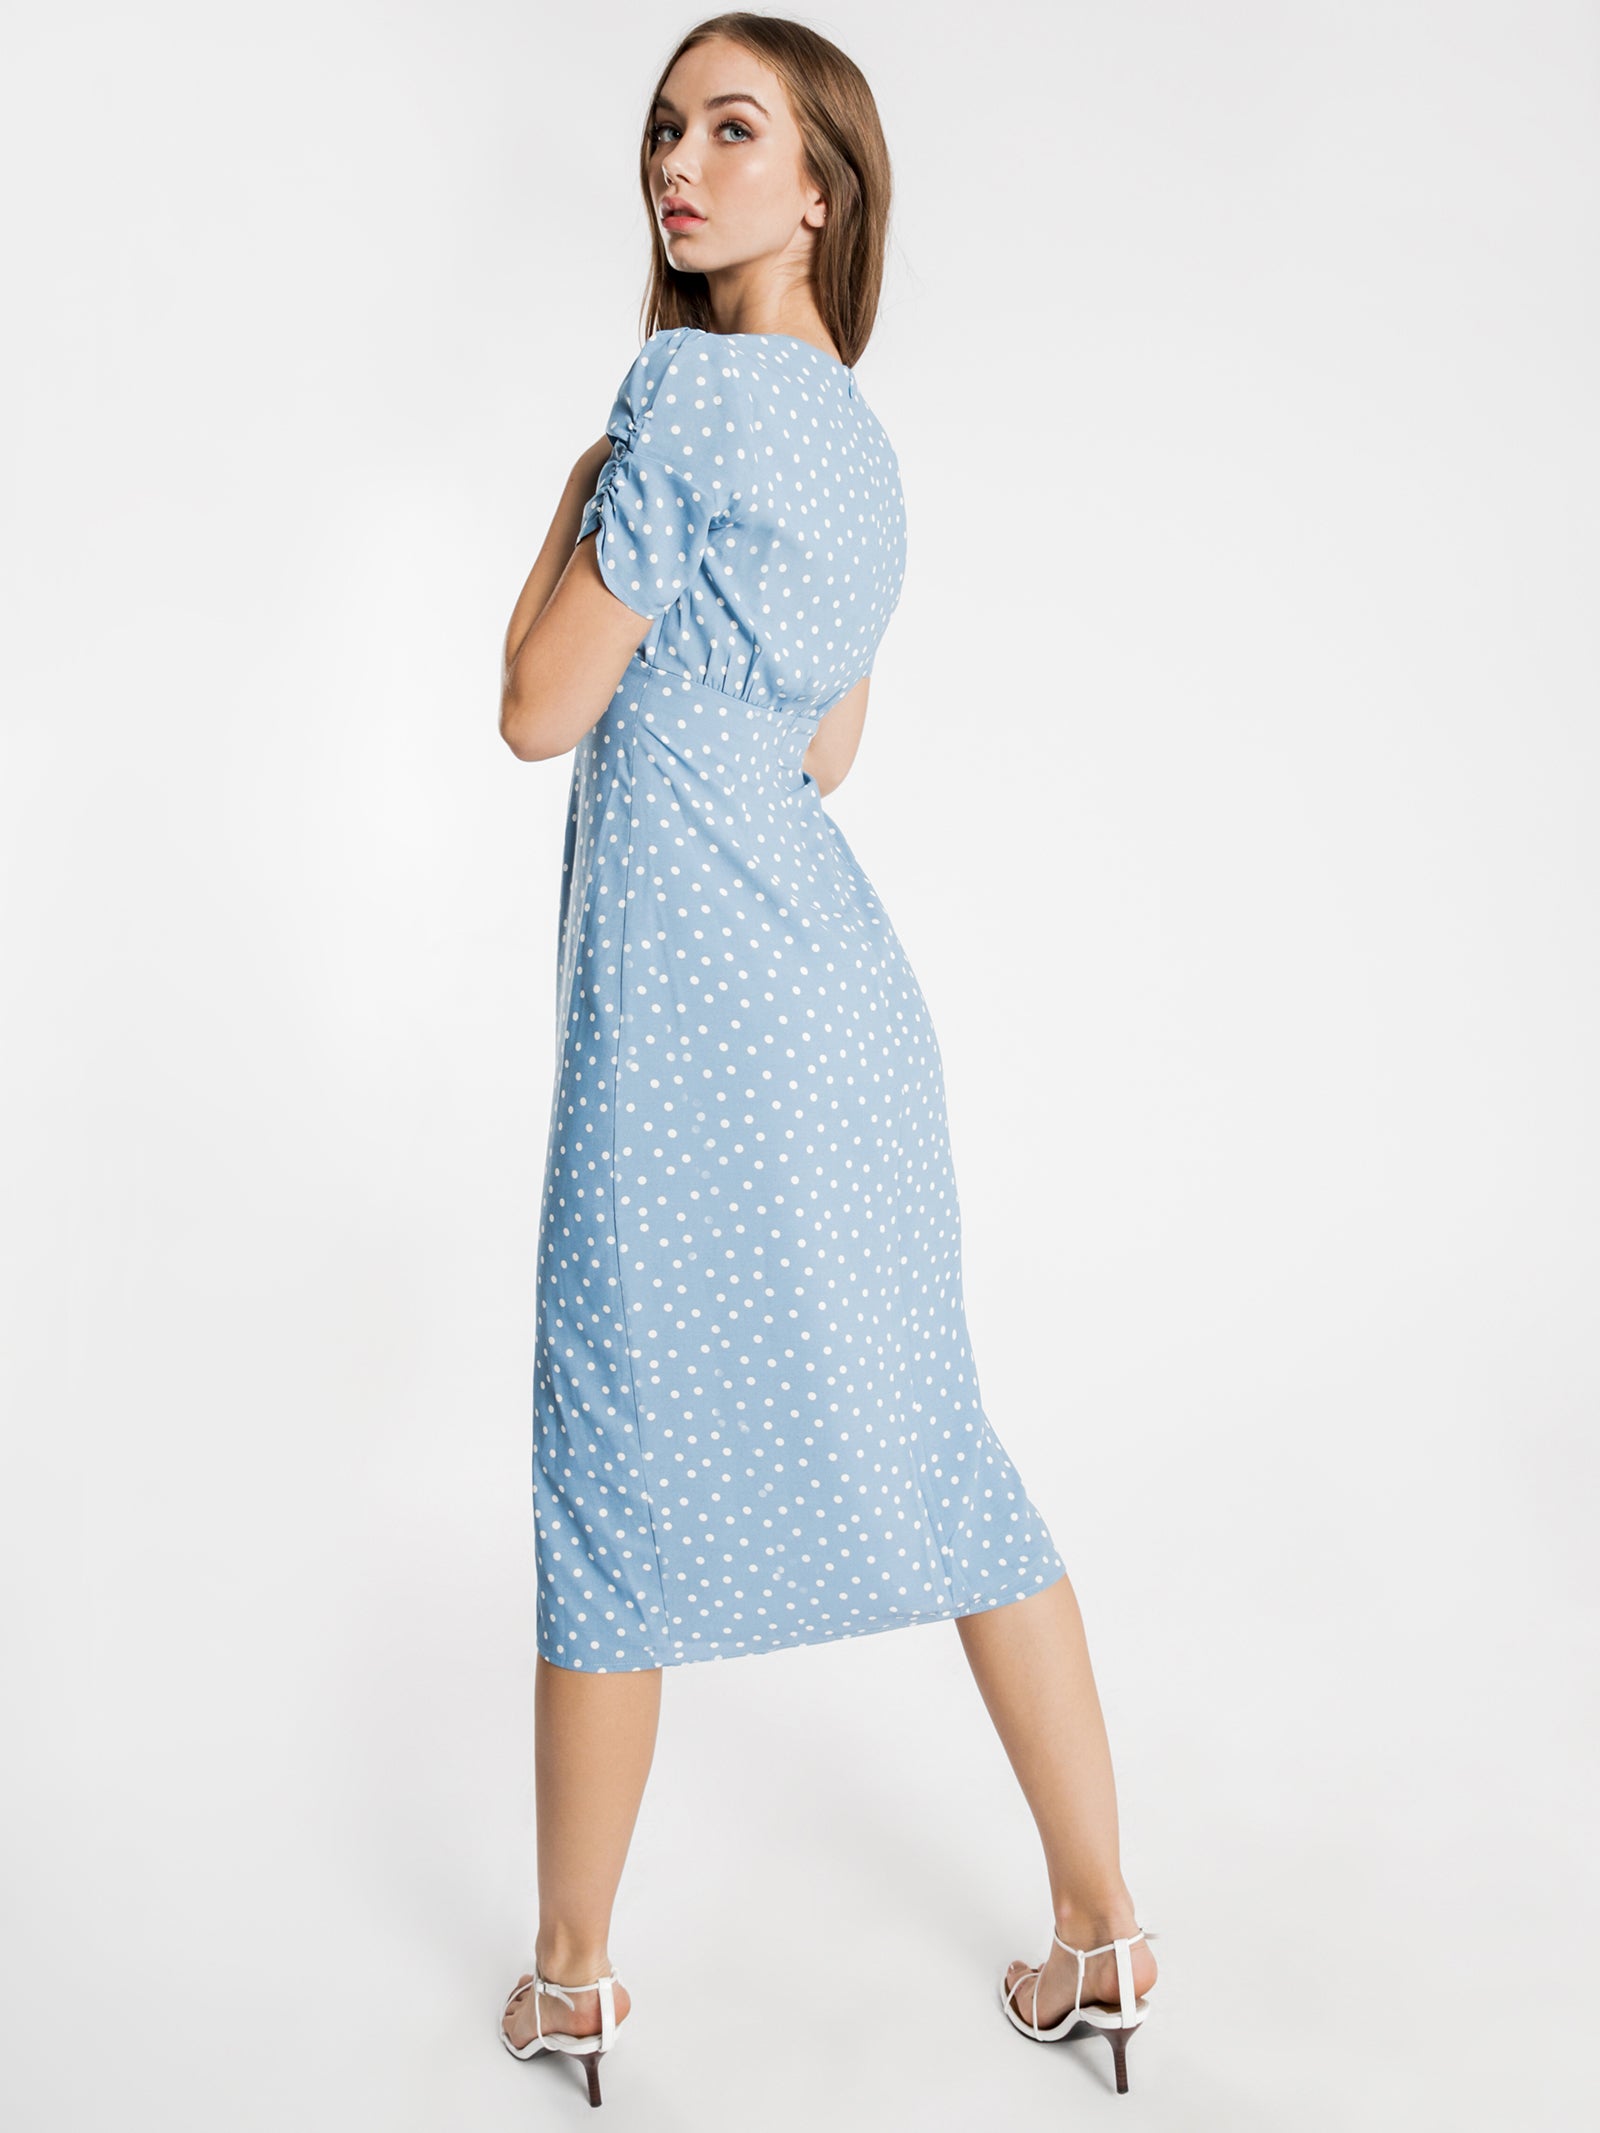 Lexi Midi Dress in Blue & White Polka Dot